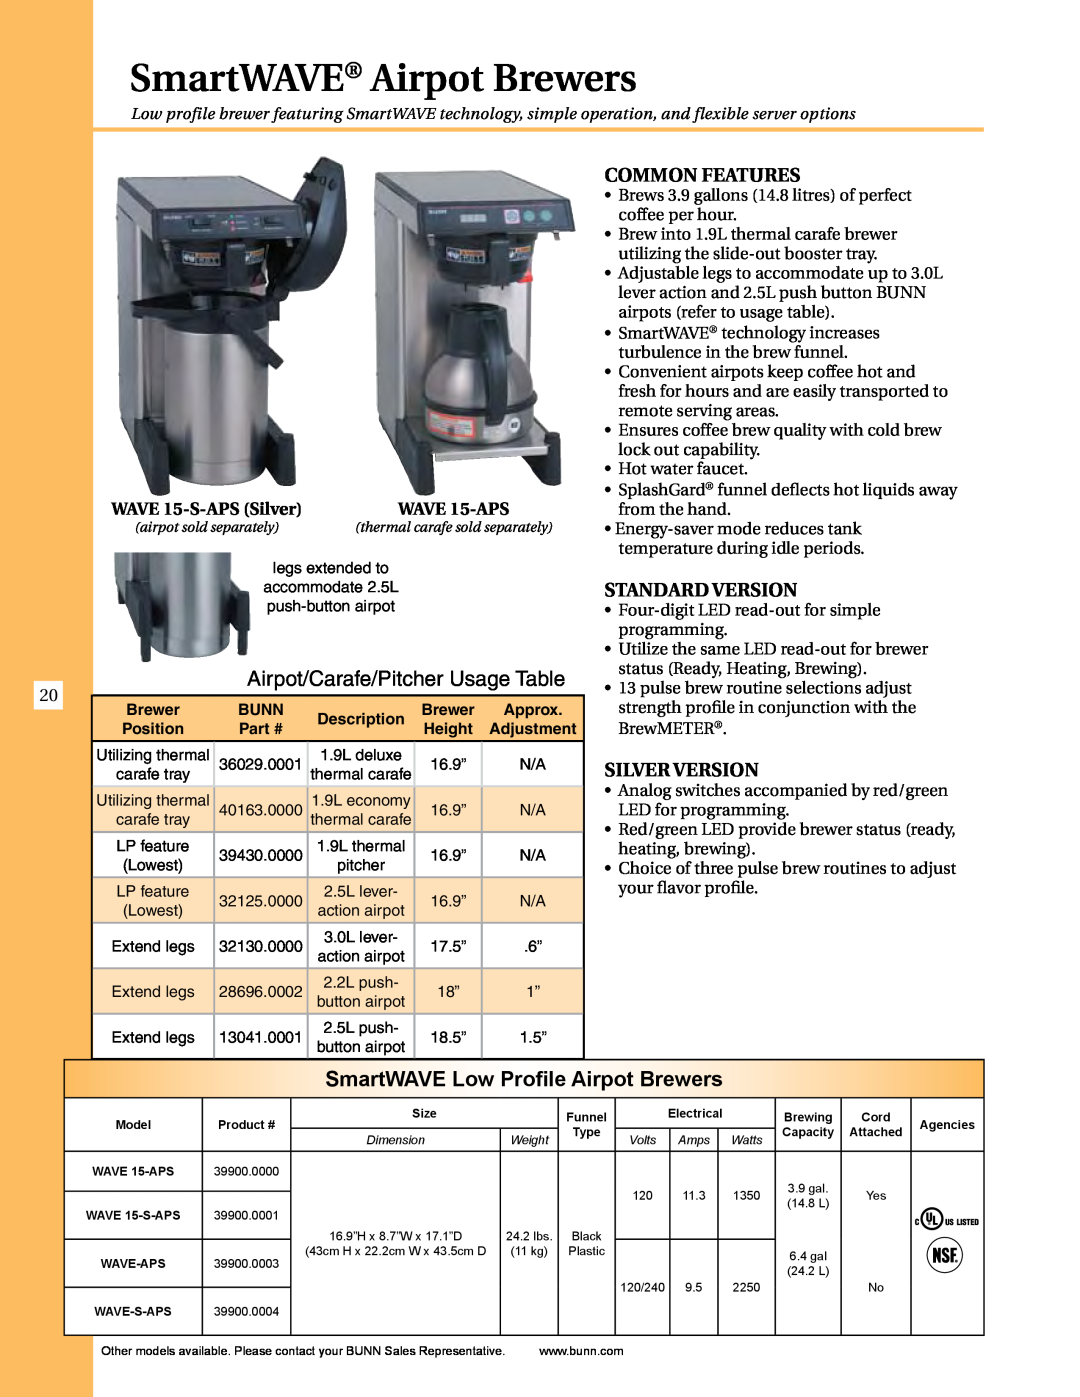 Thermal Comfort ICB-TWIN SmartWAVE Airpot Brewers, SmartWAVE Low Profile Airpot Brewers, Common Features, Standard Version 